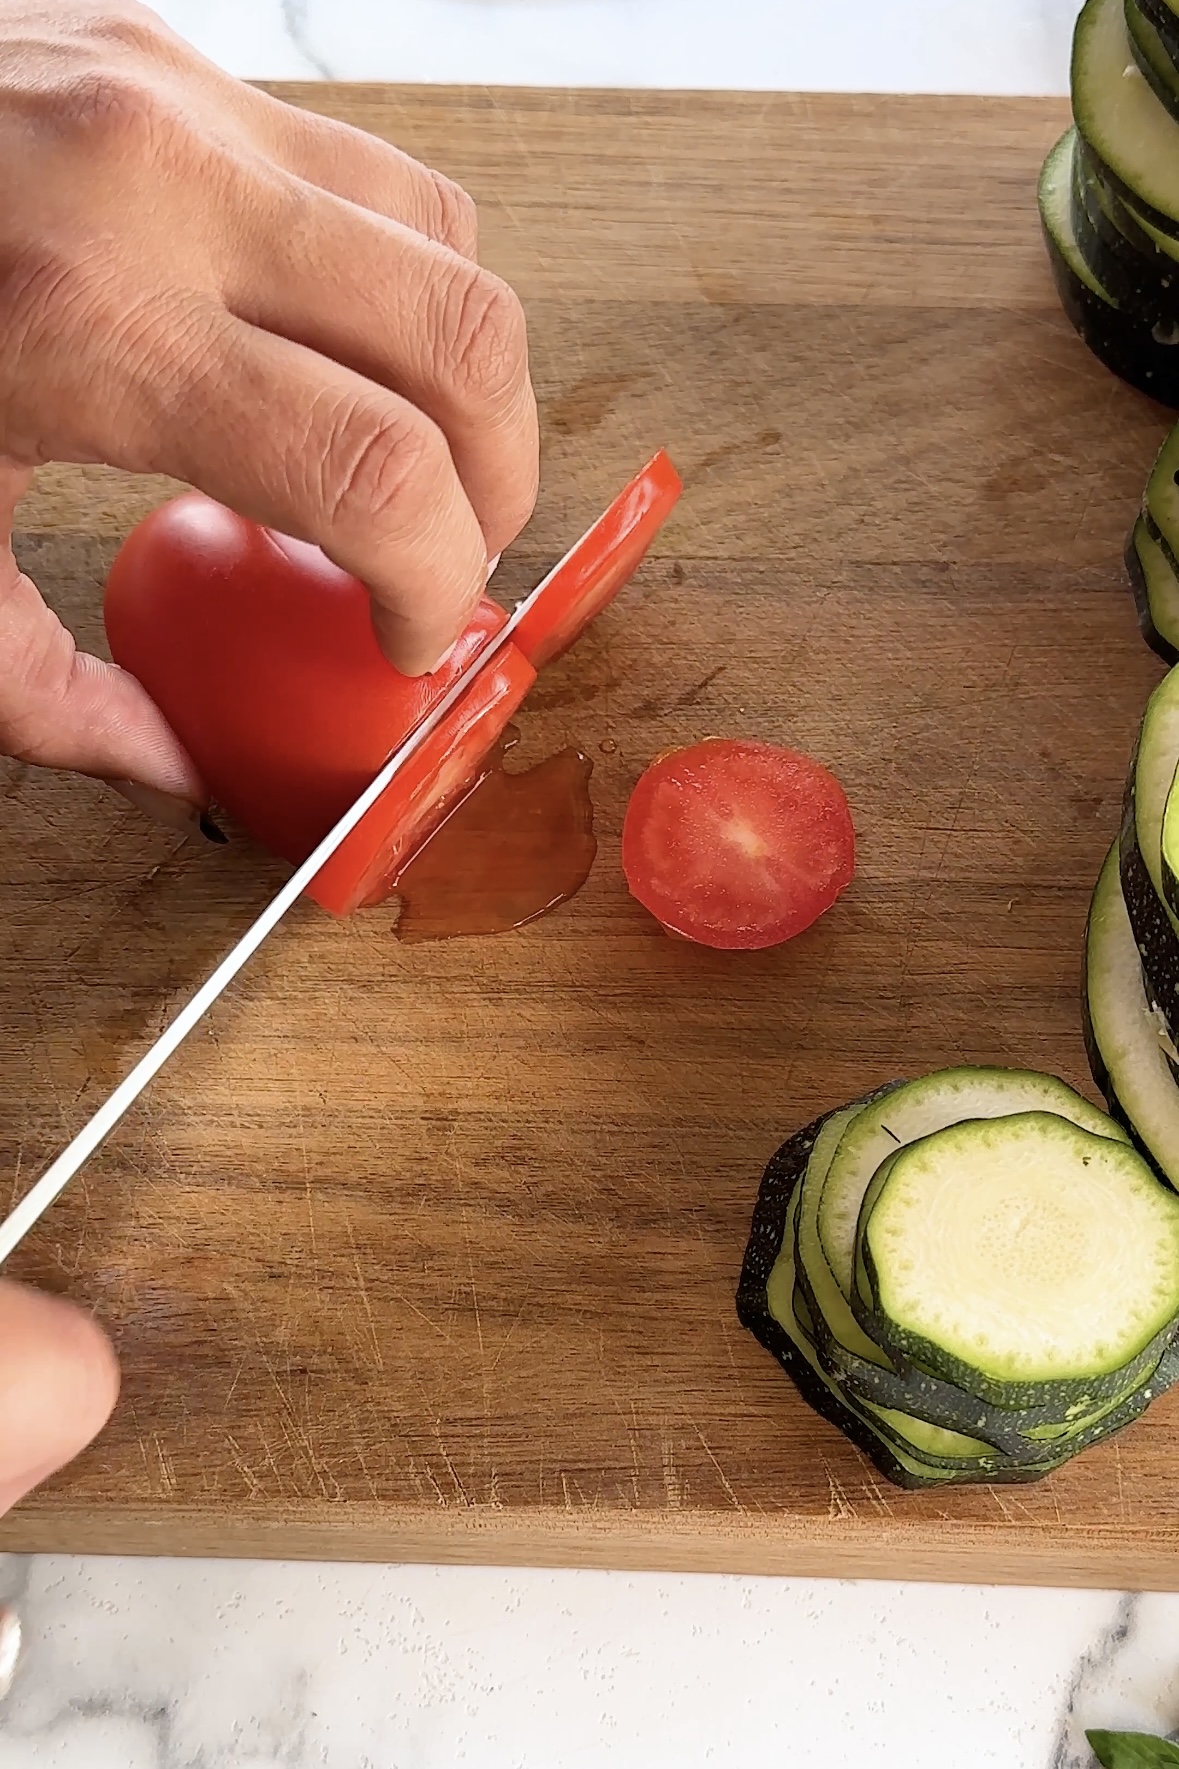 A knife slices a tomato.